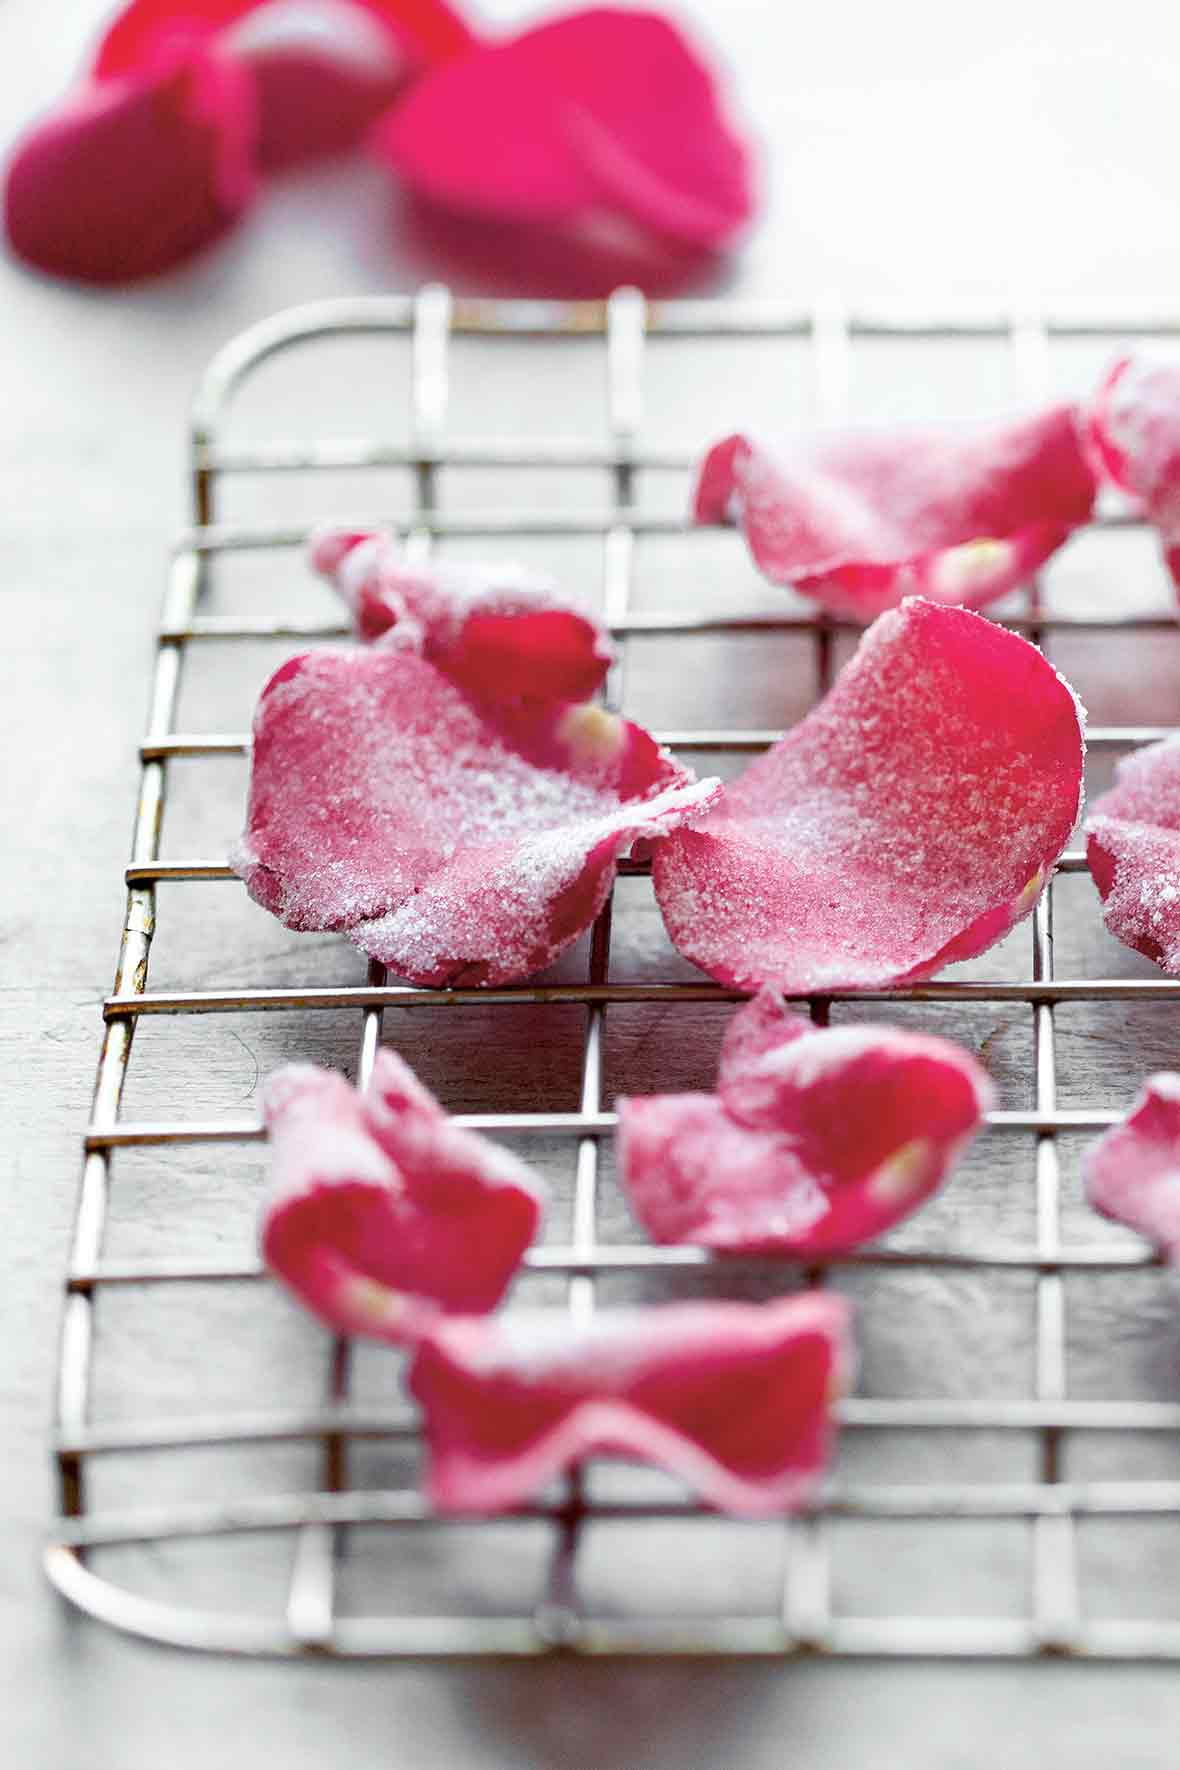 Candied Rose Petals Recipe | Leite's Culinaria